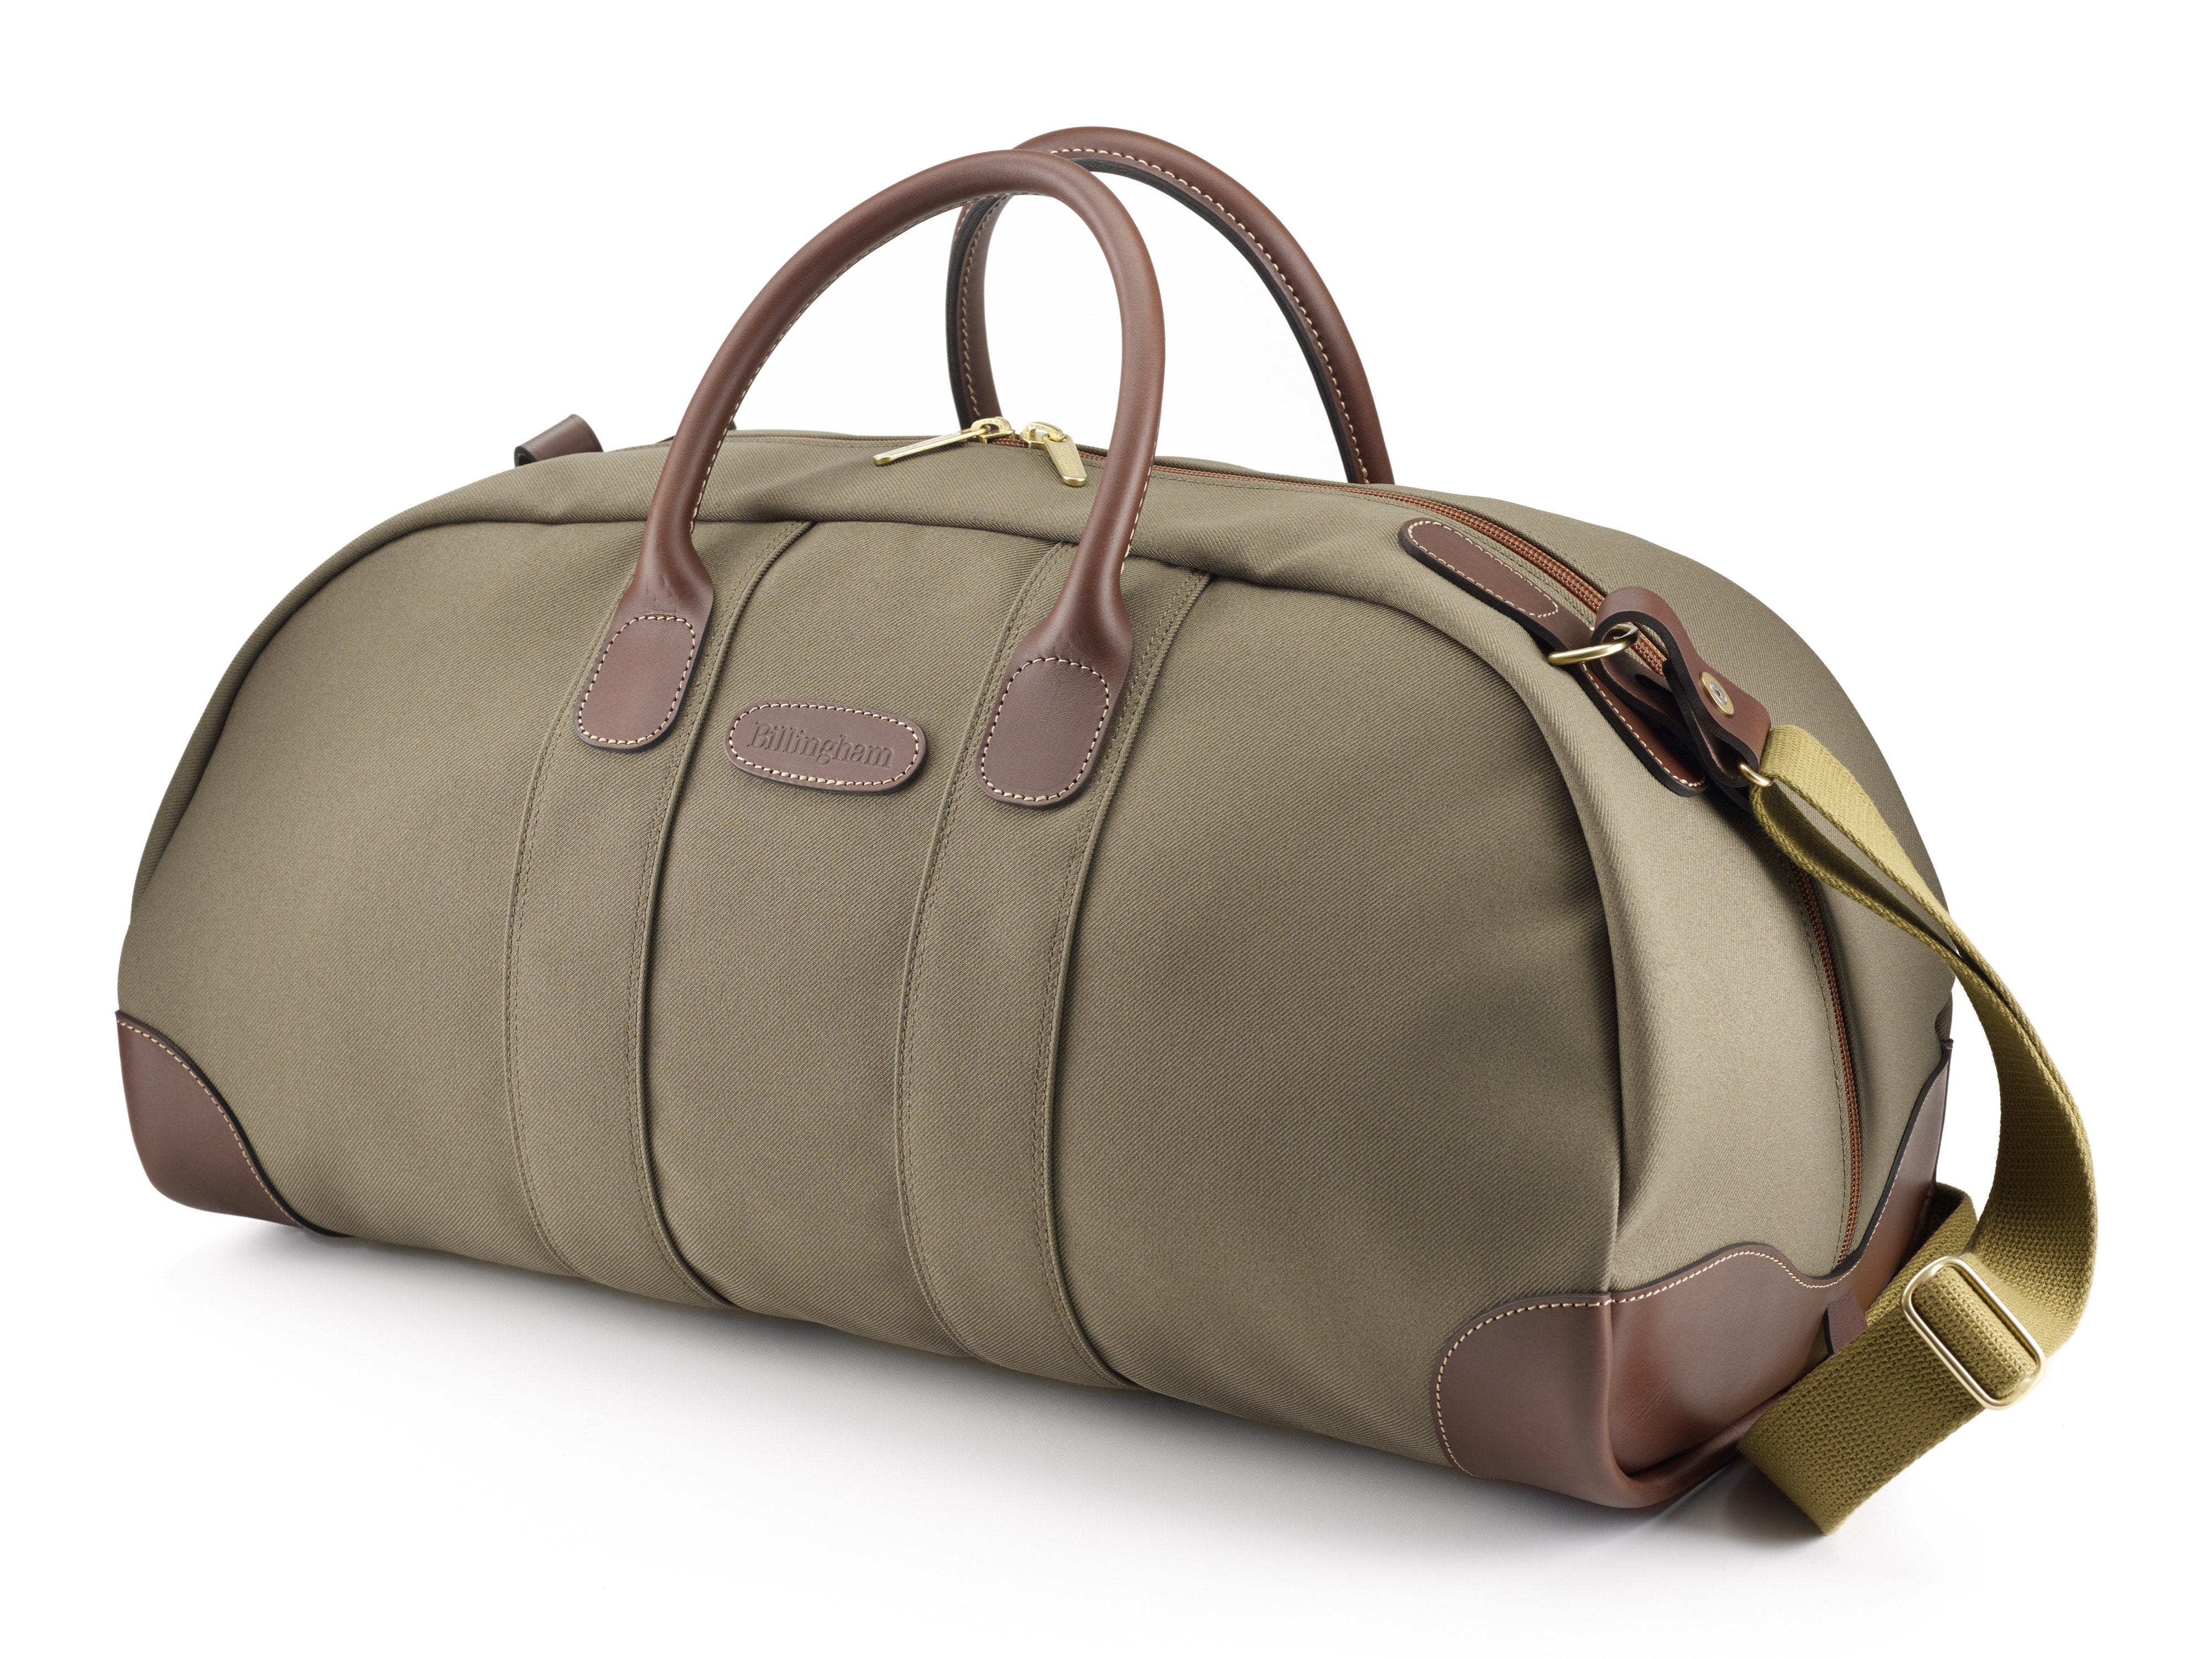 Full-Grain Leather Duffle, No. 1 Grip Travel Bag - USA Made